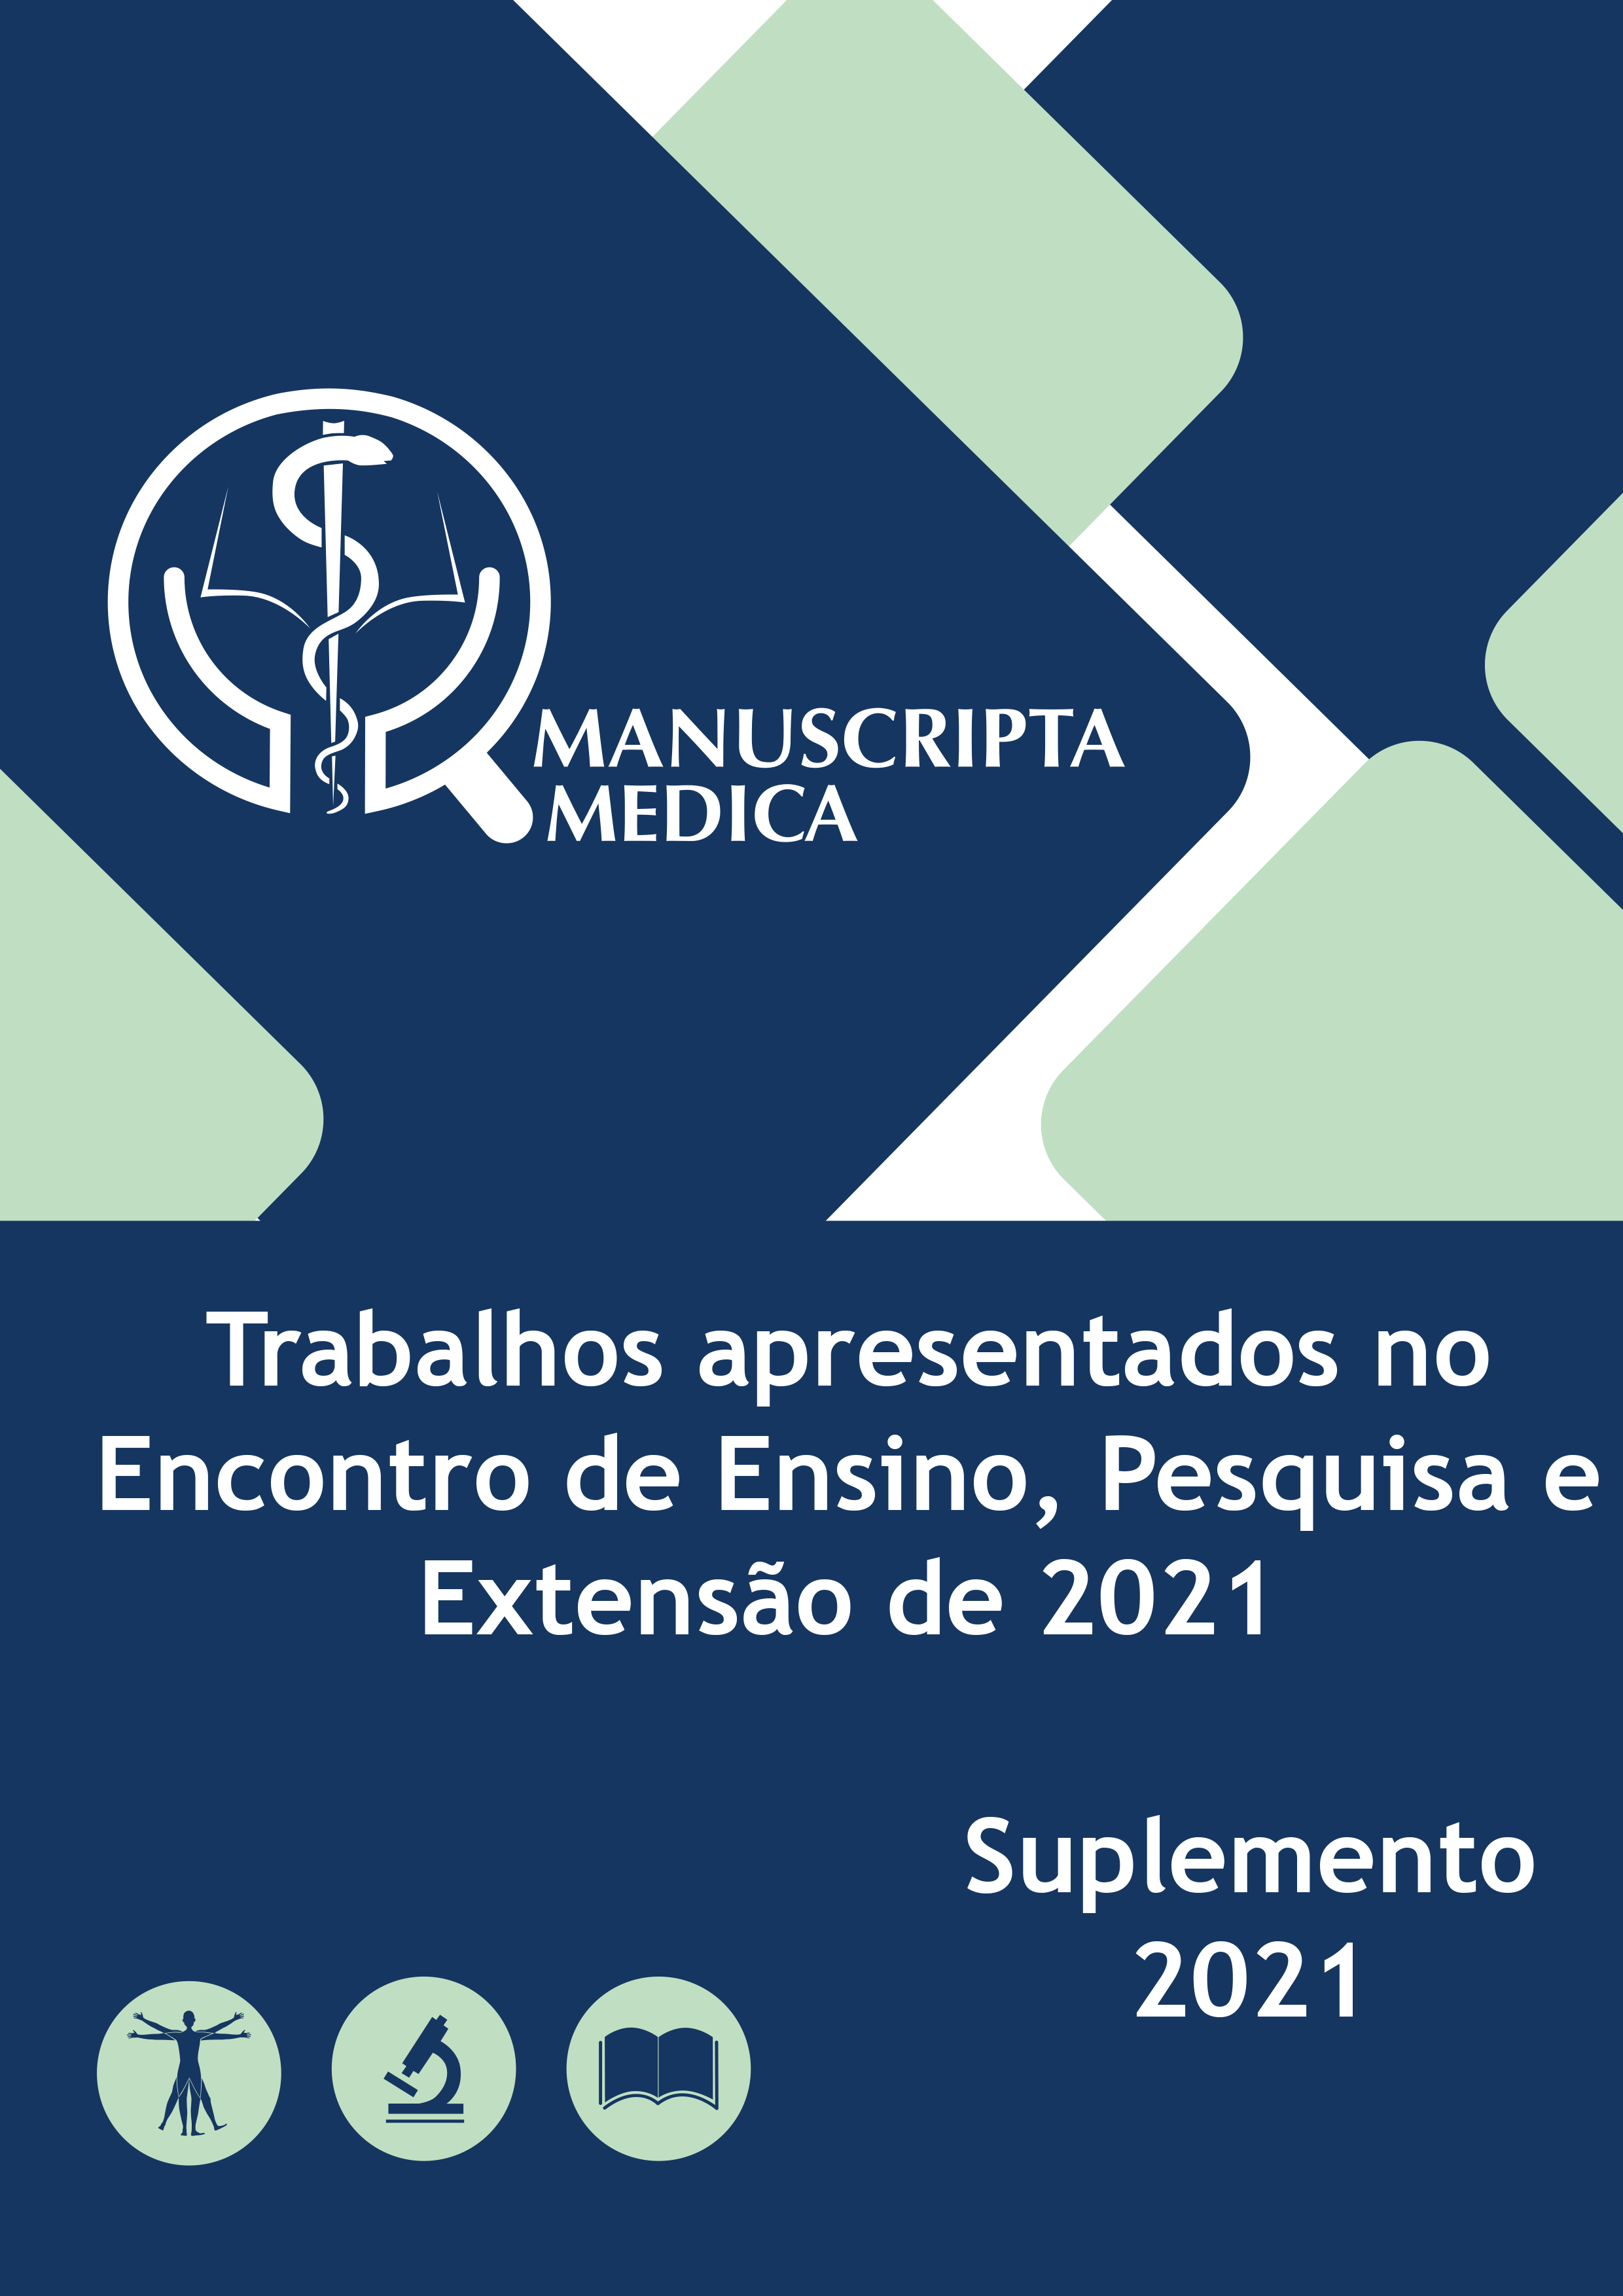 					Visualizar 2021: Suplemento Manuscripta Medica
				